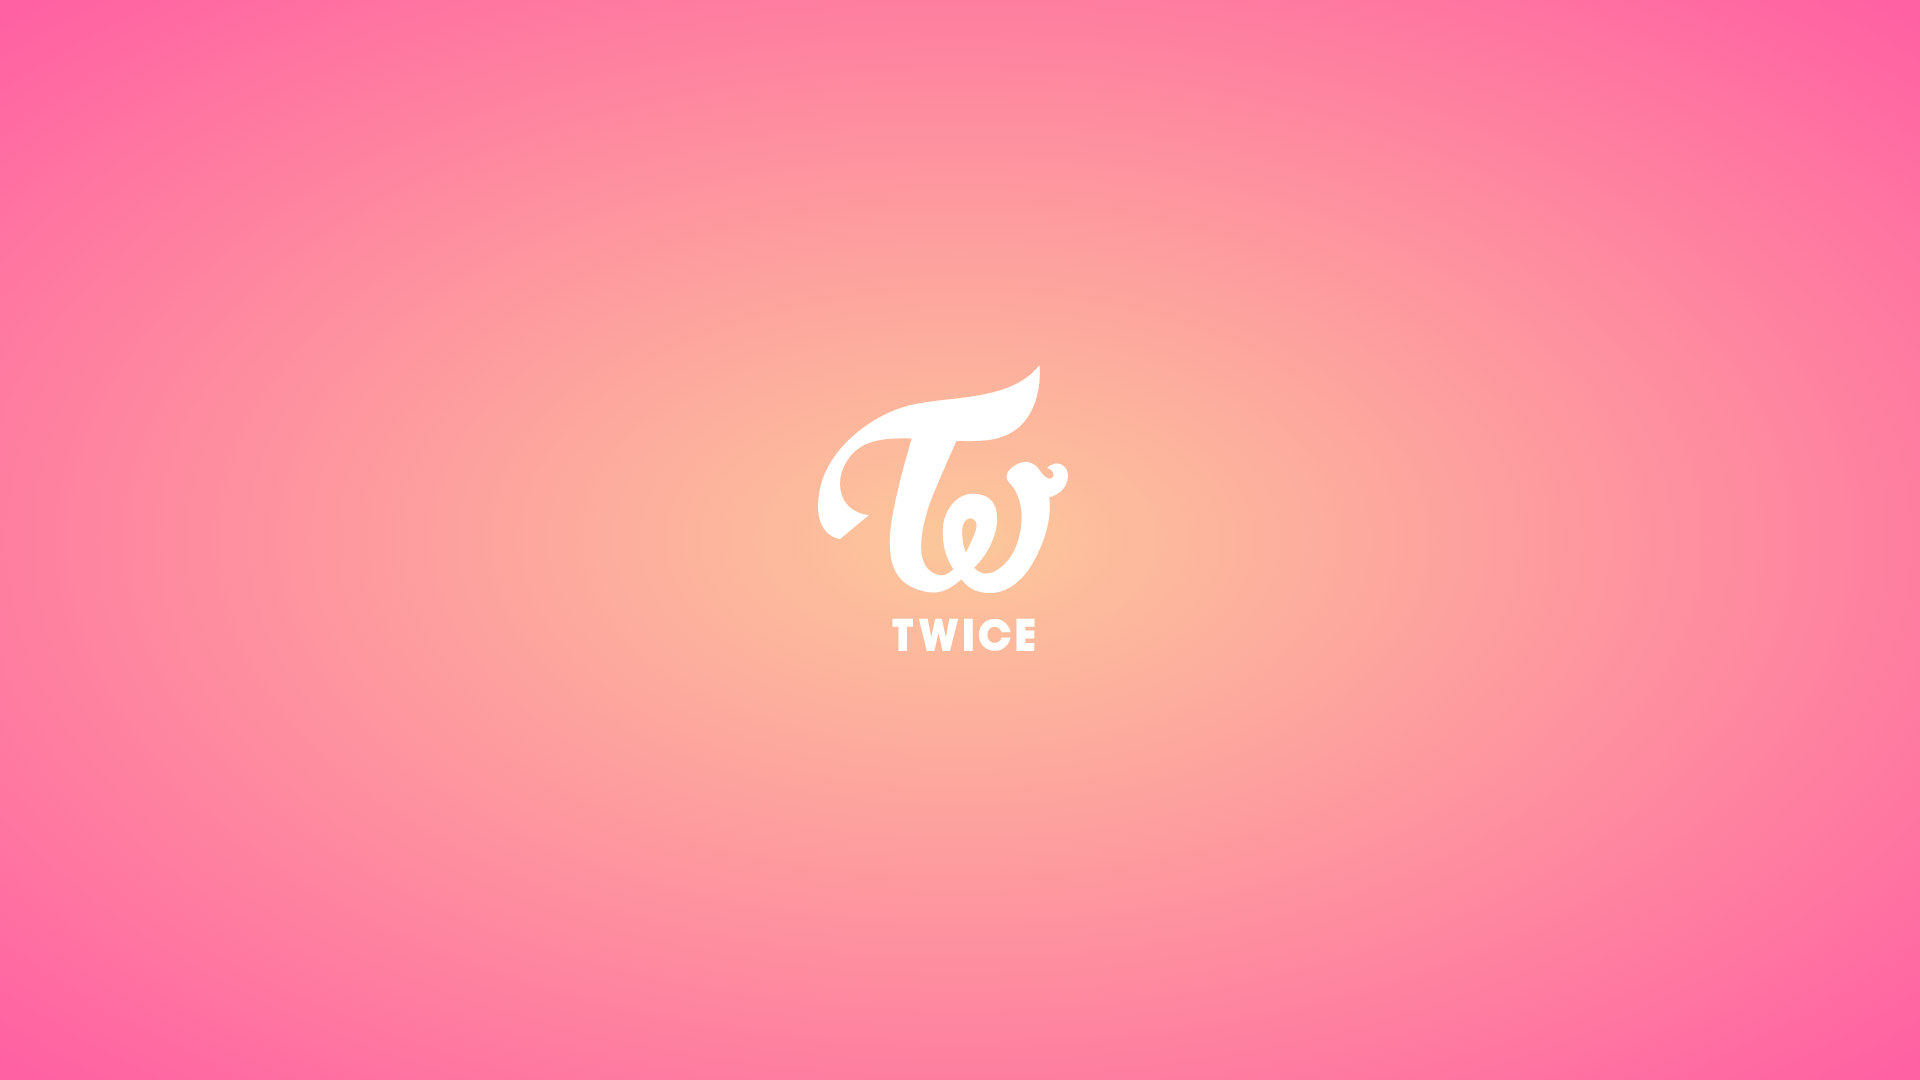 Twice Logo Wallpaper Laptop - Twice wallpaper ·① Download free cool High Resolution